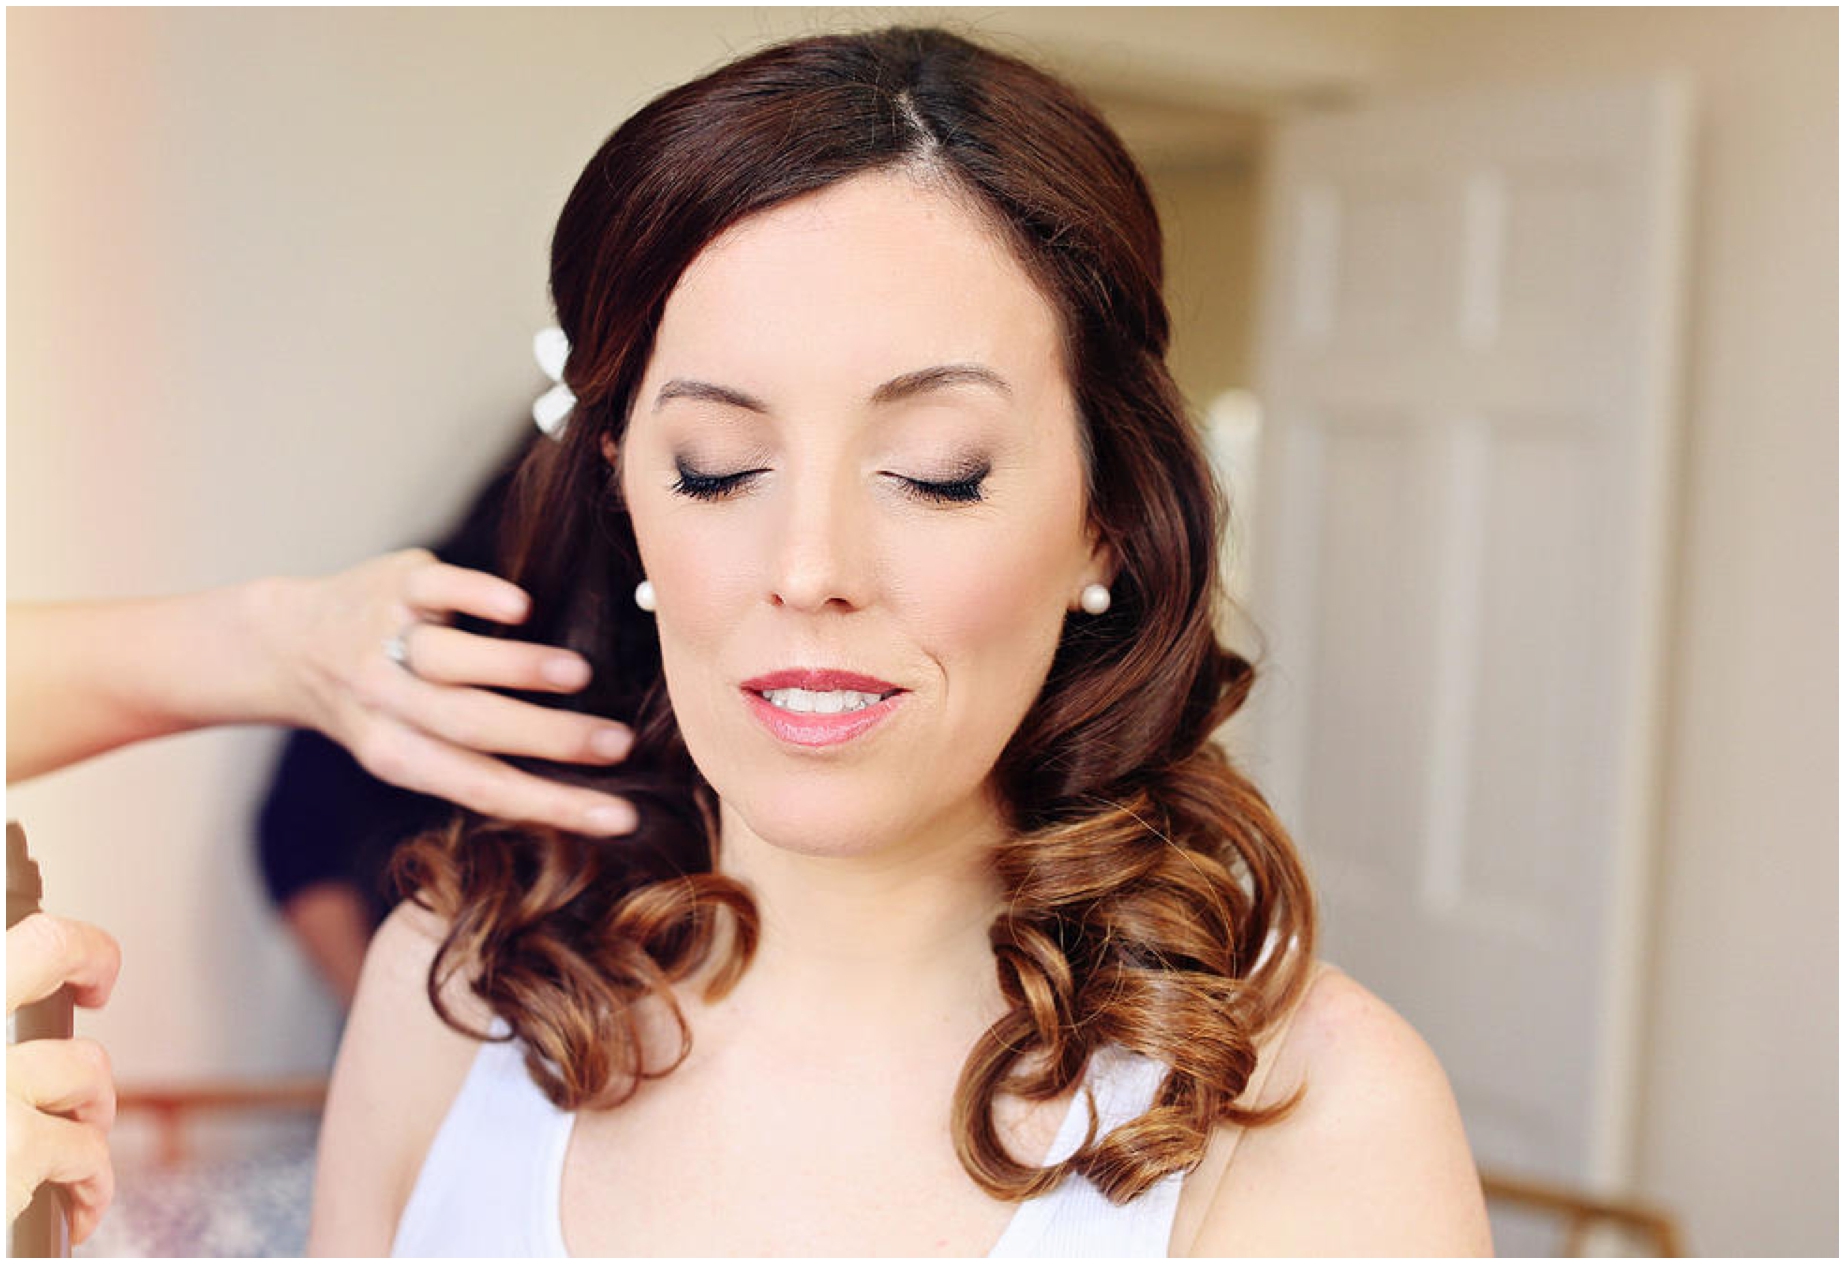 HAIR & MAKEUP by Jennie Kay Beauty, Bridal hair, bridal makeup, updo, half up hair, bridal gown, newport wedding, newport bride, rhode island wedding, herb photography